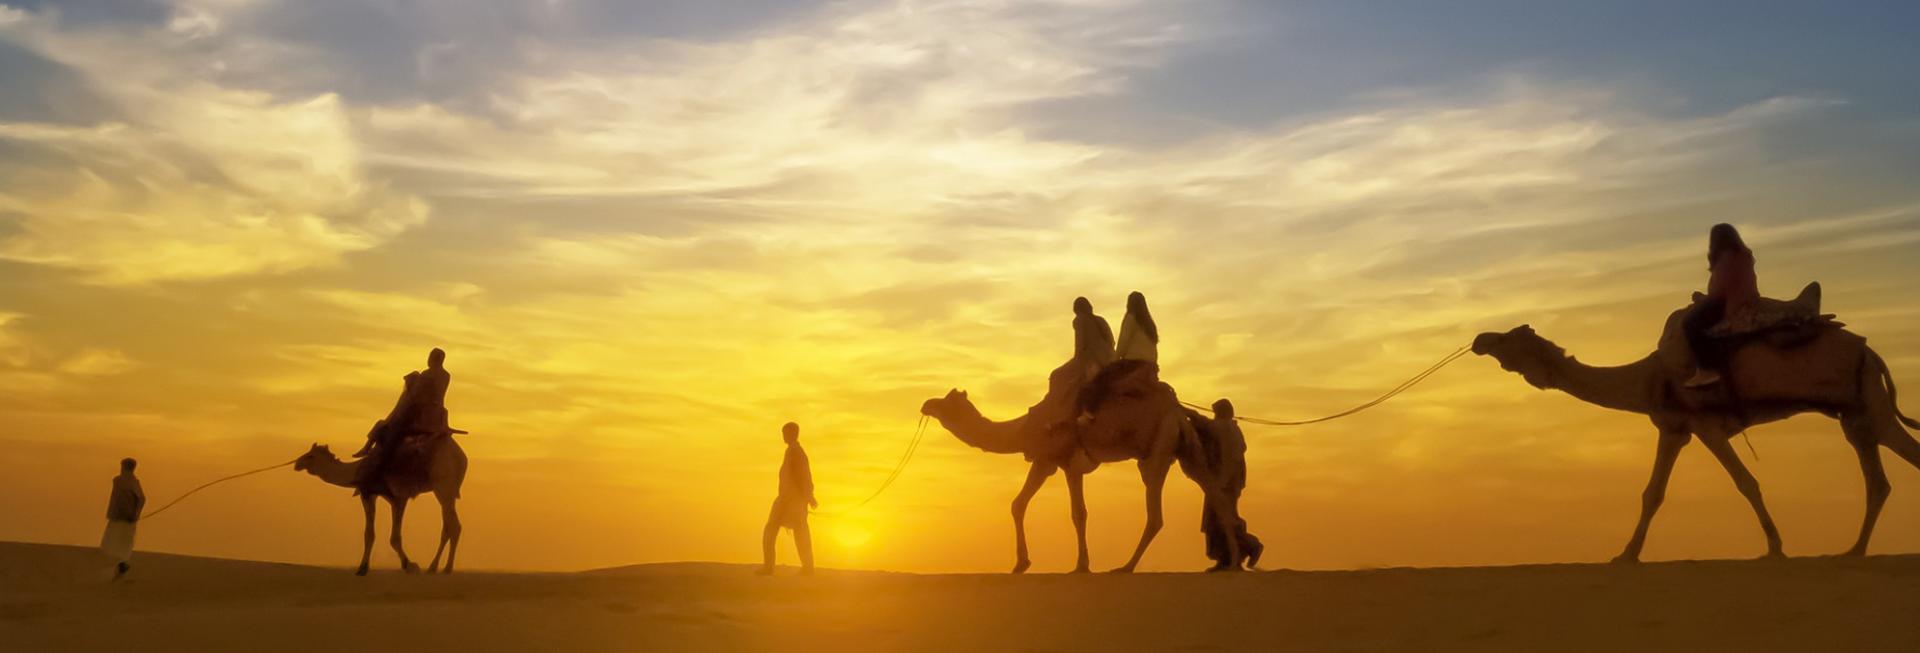 Camel safari, Thar Desert, India